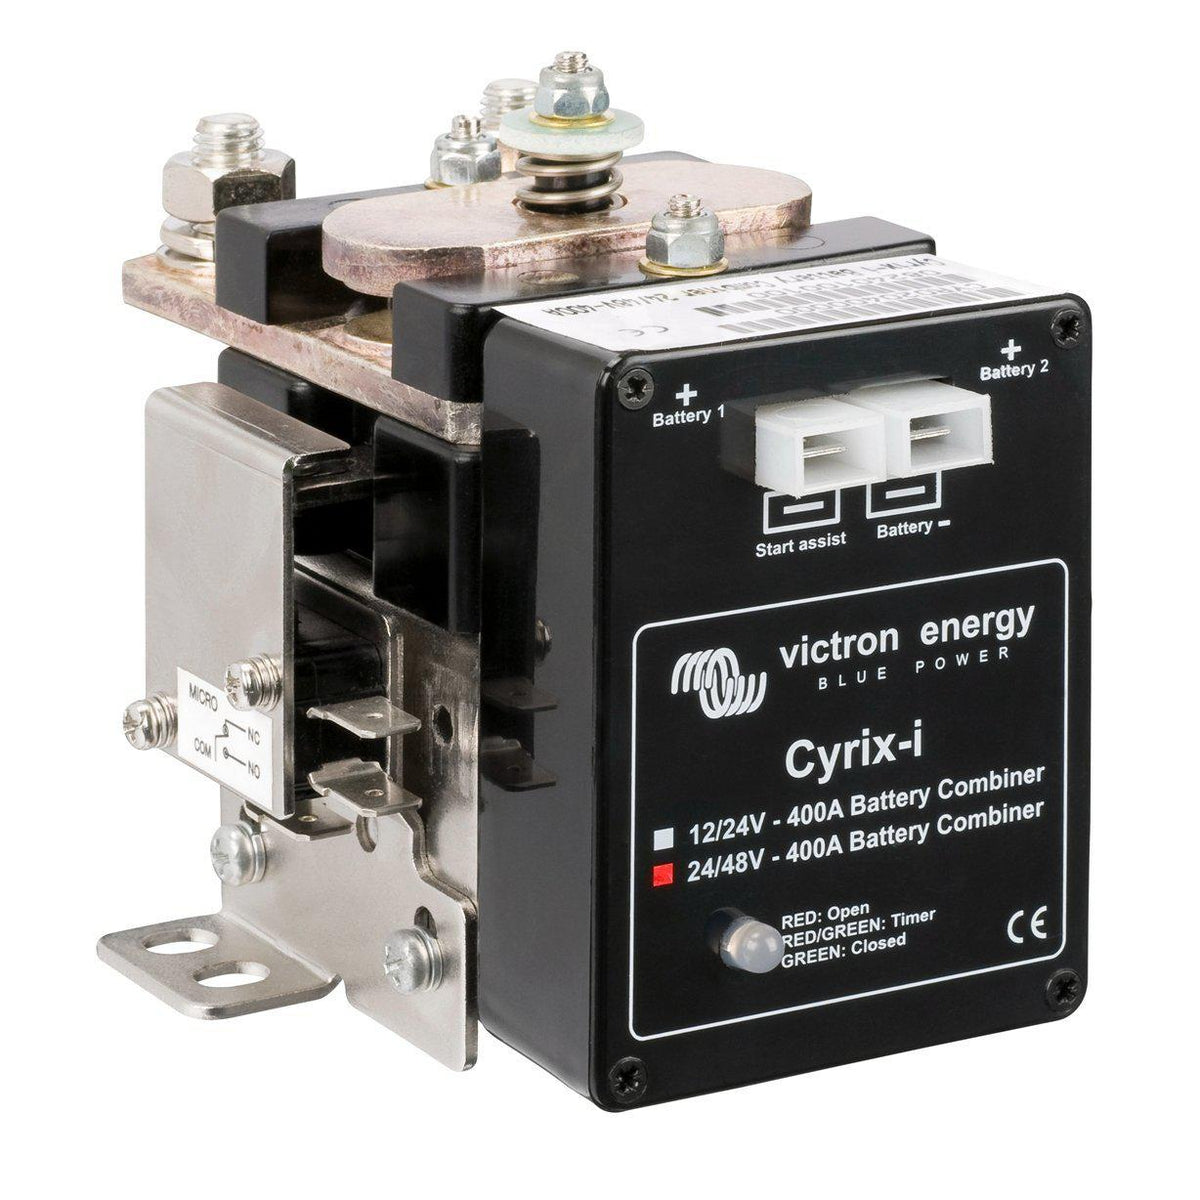 Cyrix-i 24/48V-400A intelligent battery combiner - SBP Electrical